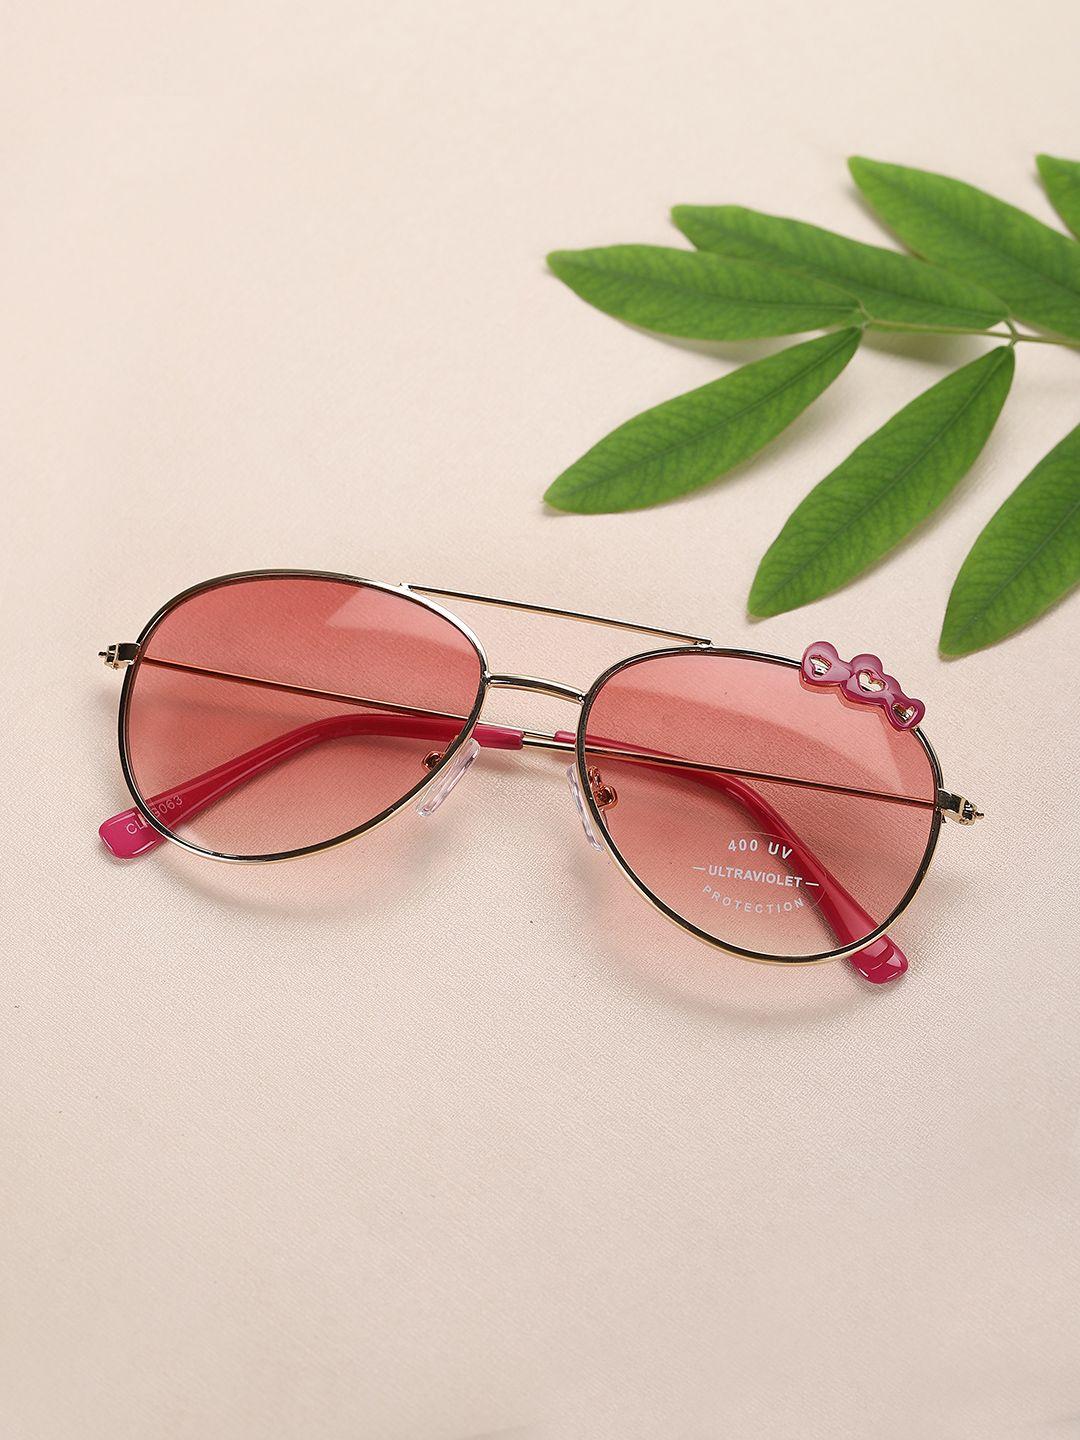 carlton-london-girls-pink-lens-&-gold-toned-aviator-sunglasses-uv-protected-lens-clsg063